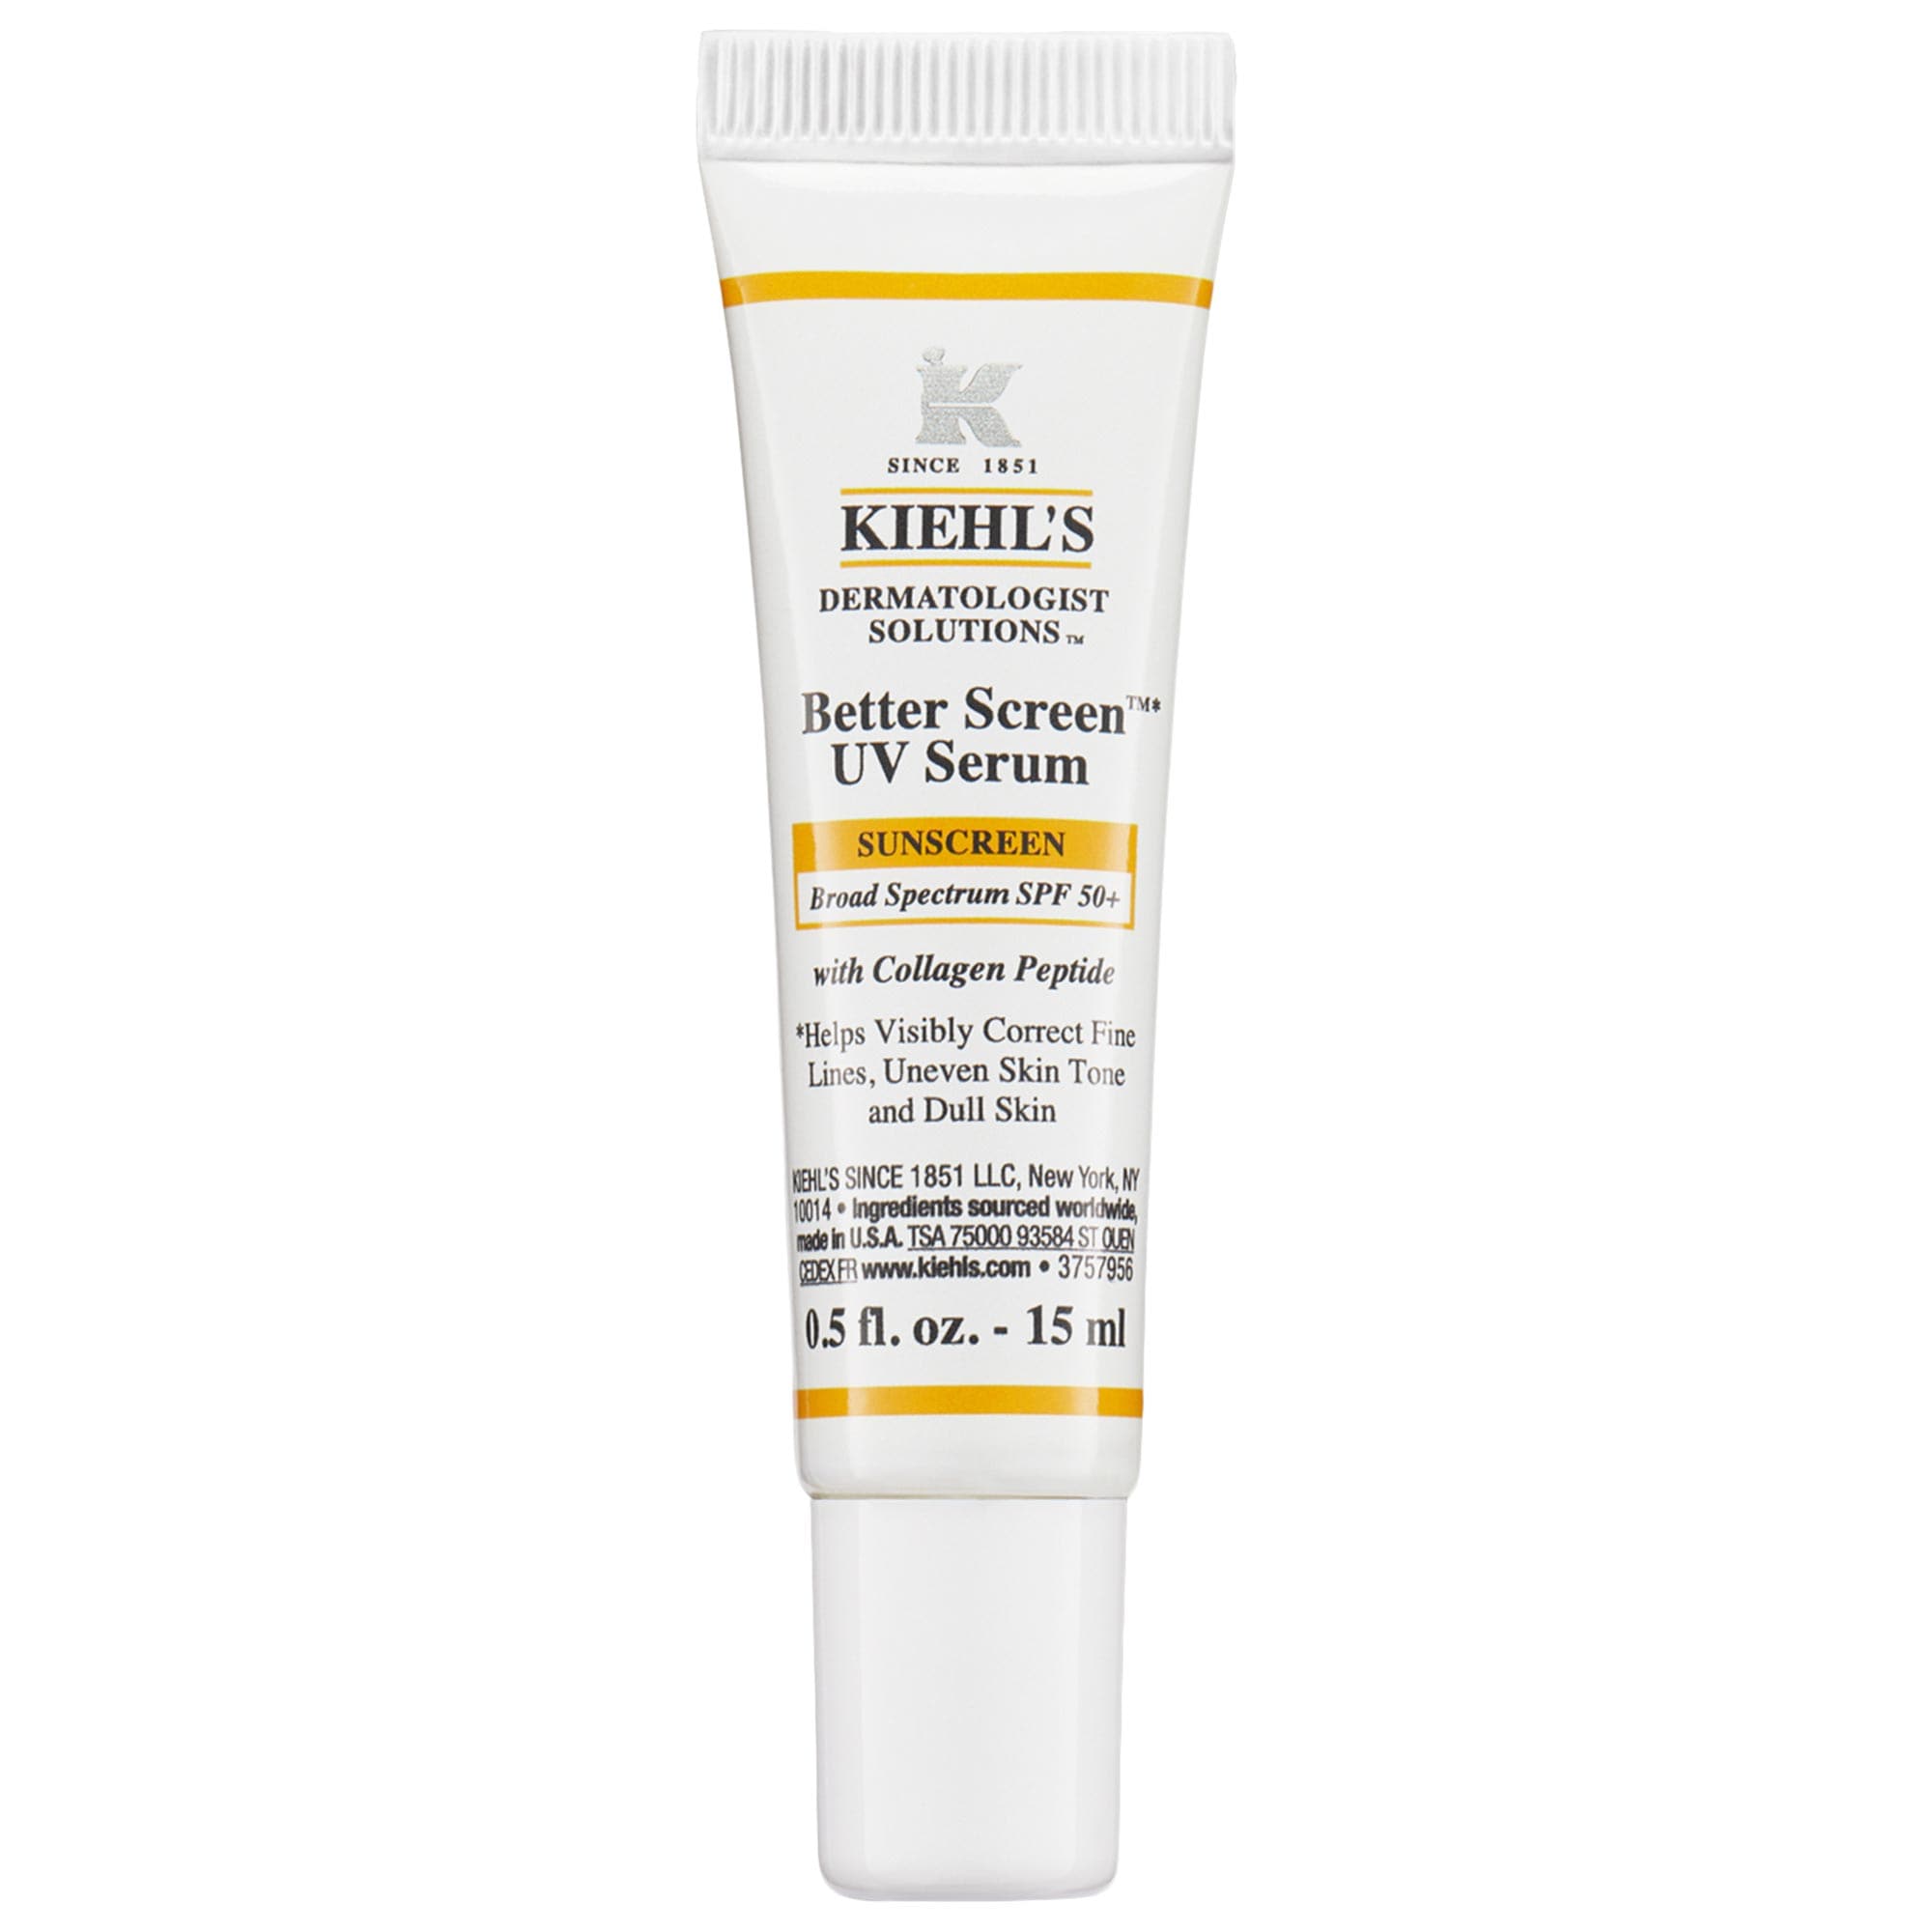 Mini Better Screen™ UV Serum SPF 50+ Facial Sunscreen with Collagen Peptide Kiehl's Since 1851